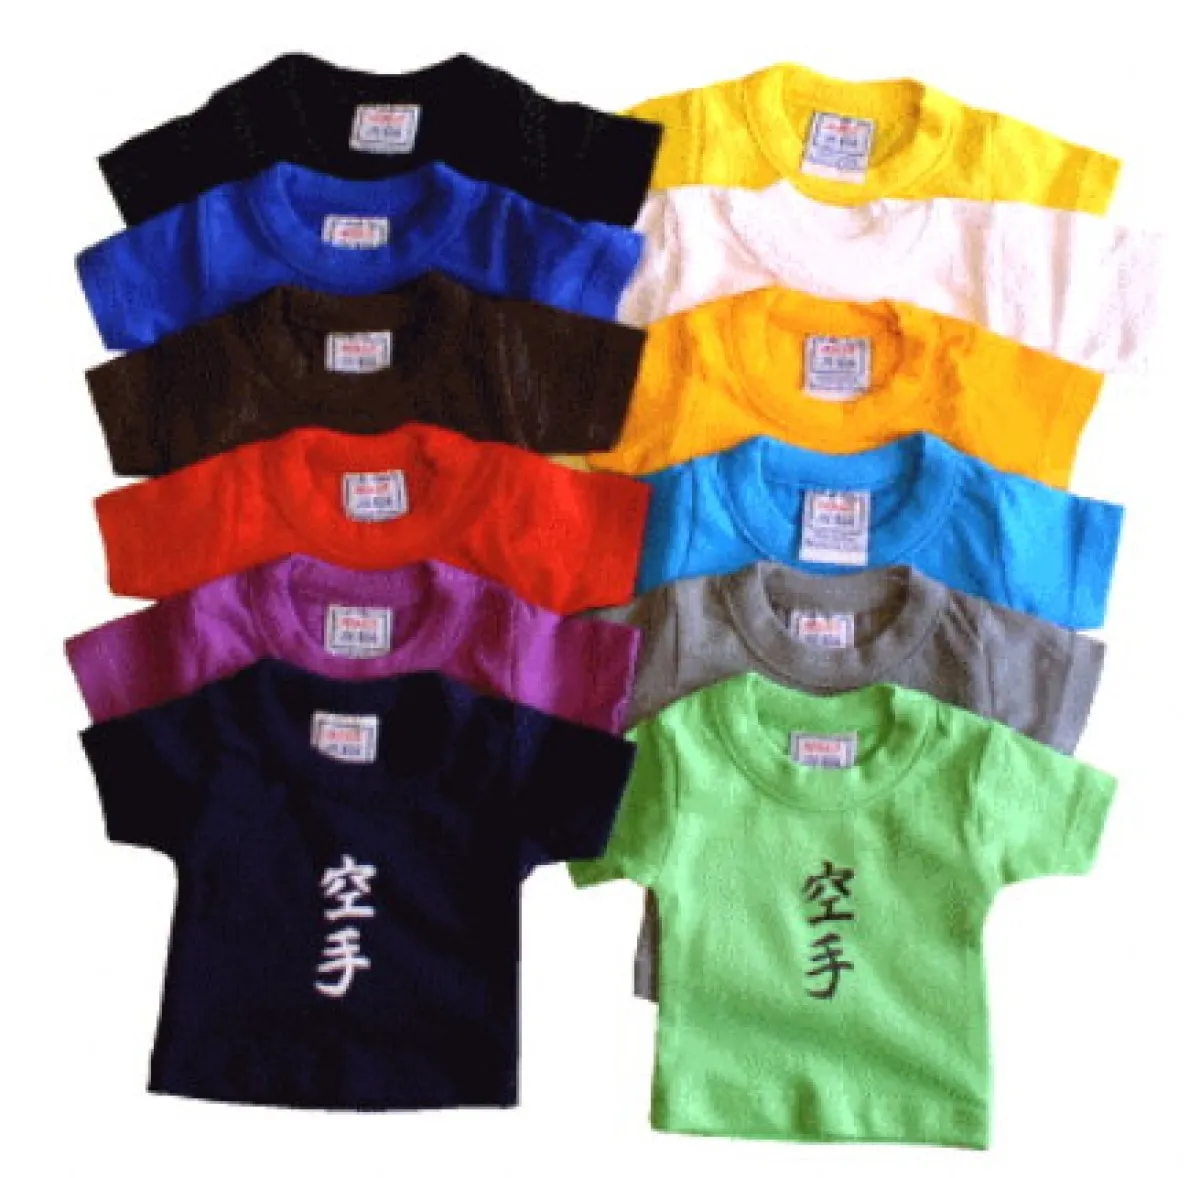 Mini T-shirt printed with karate